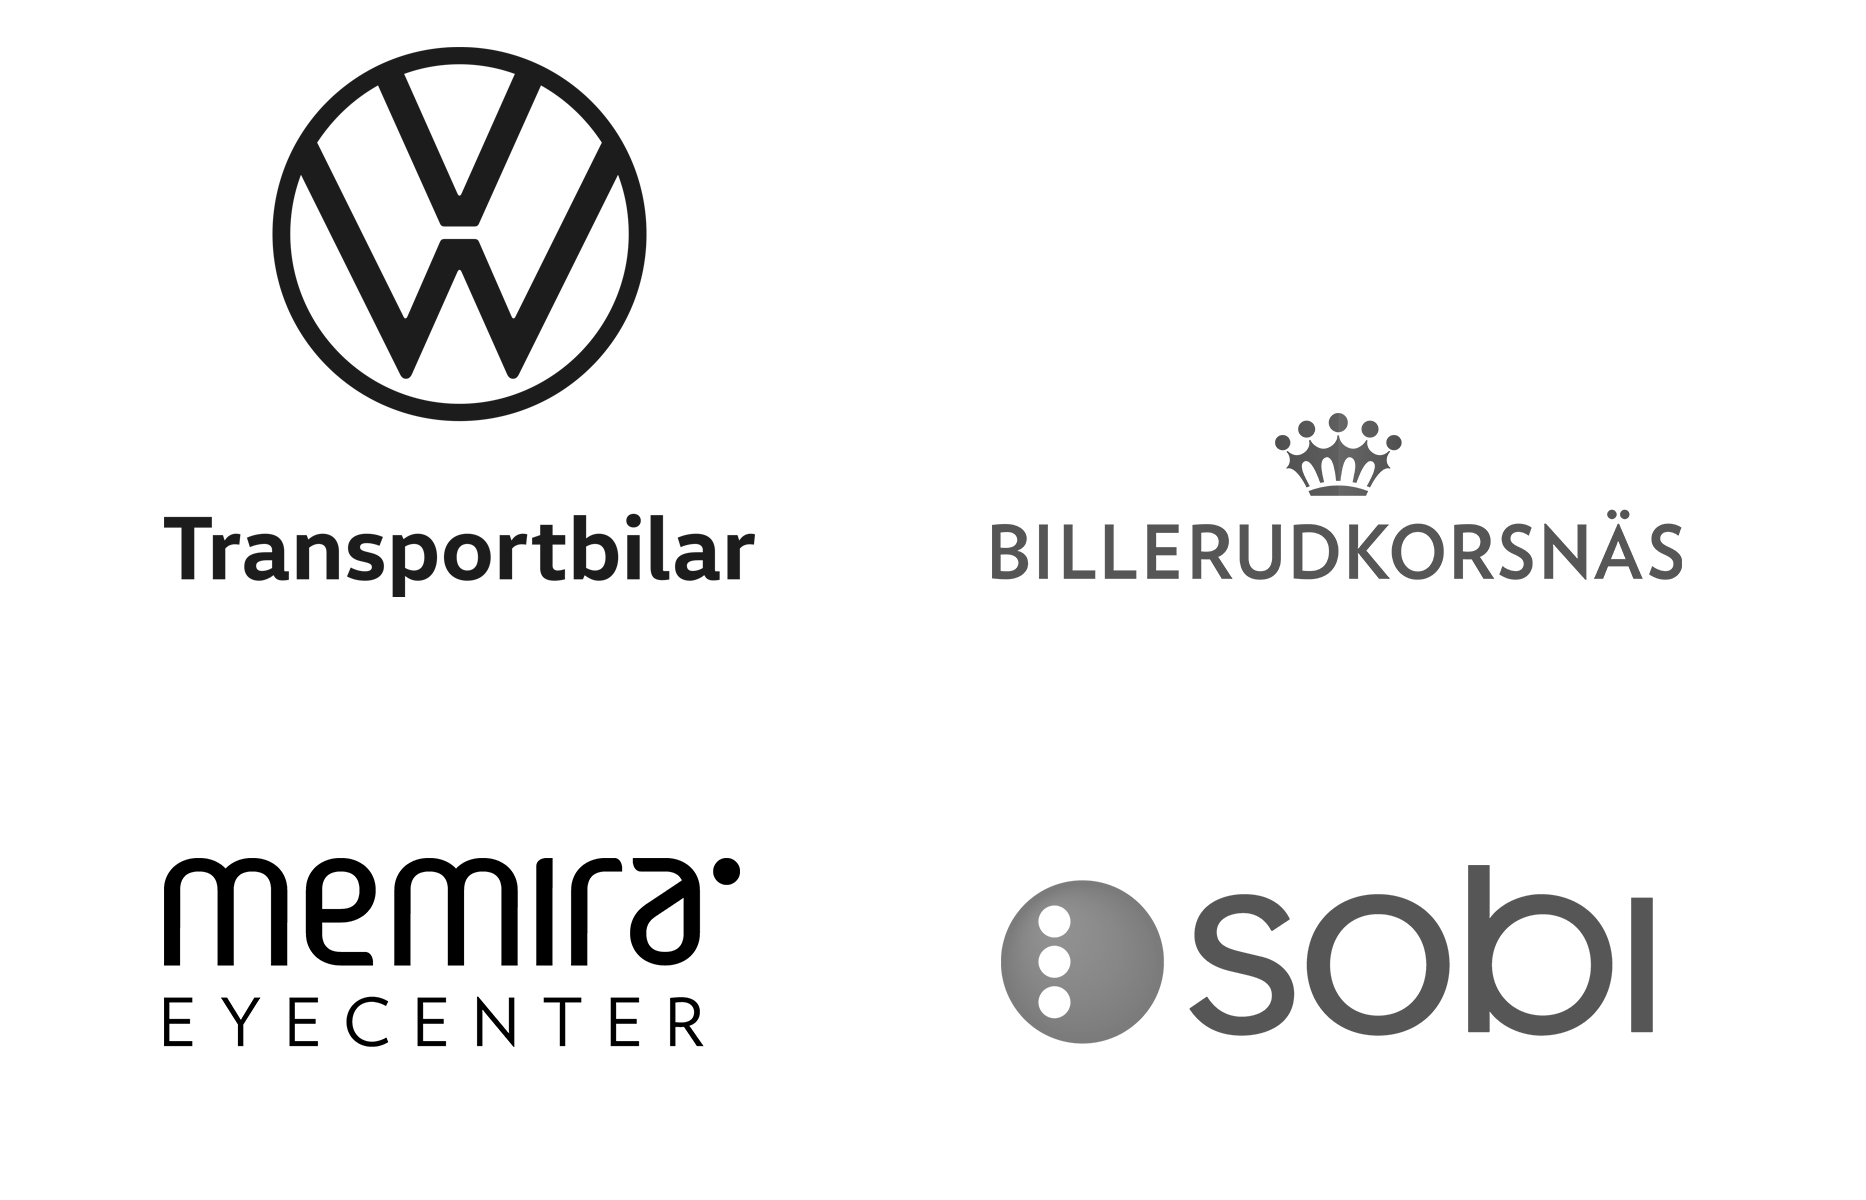 Volkswagen Transportbilar, BillerudKorsnäs, Memira Eyecenter, Swedish Orphan Biovitrum AB